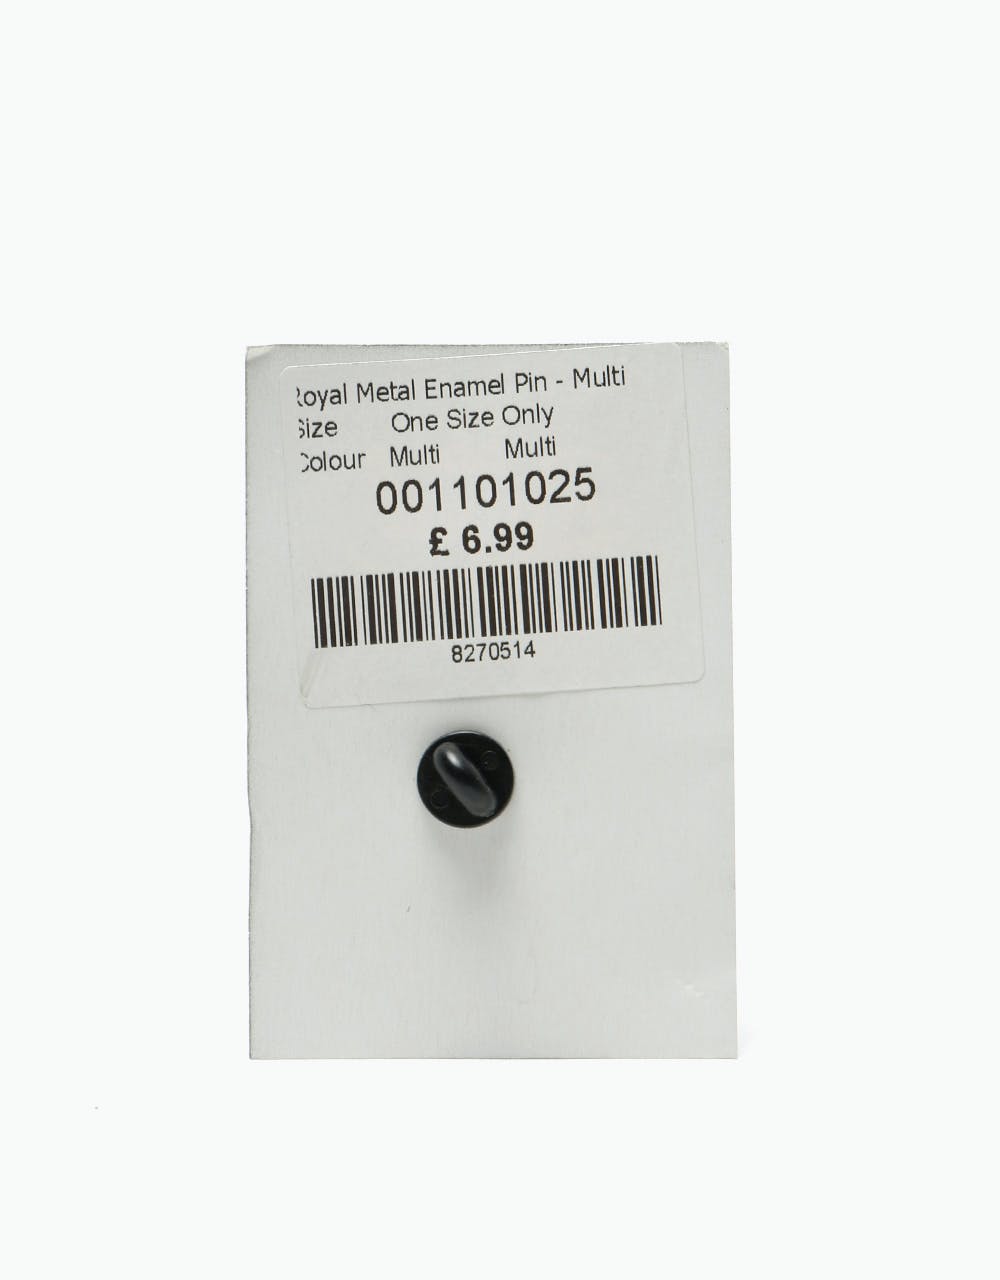 Royal Metal Enamel Pin - Multi